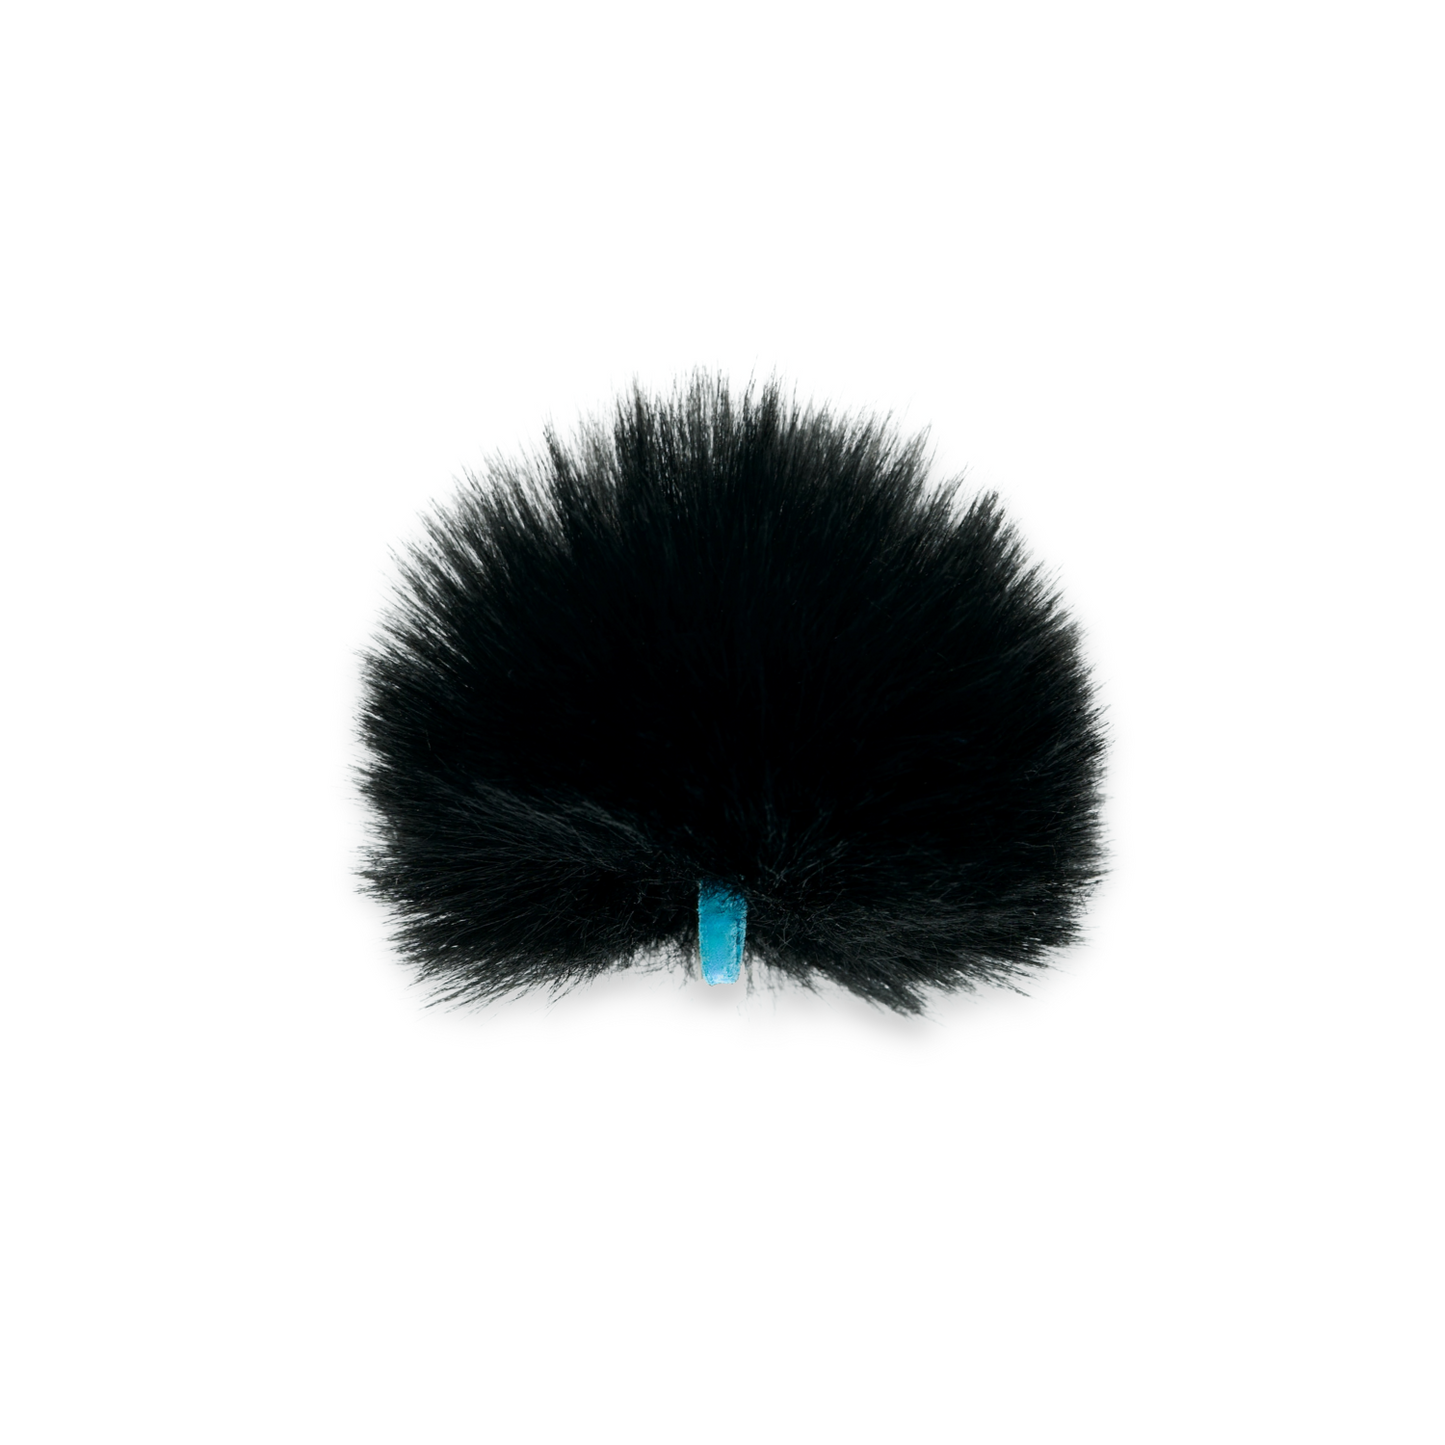 Urchin Lav windshield, Black (Single)